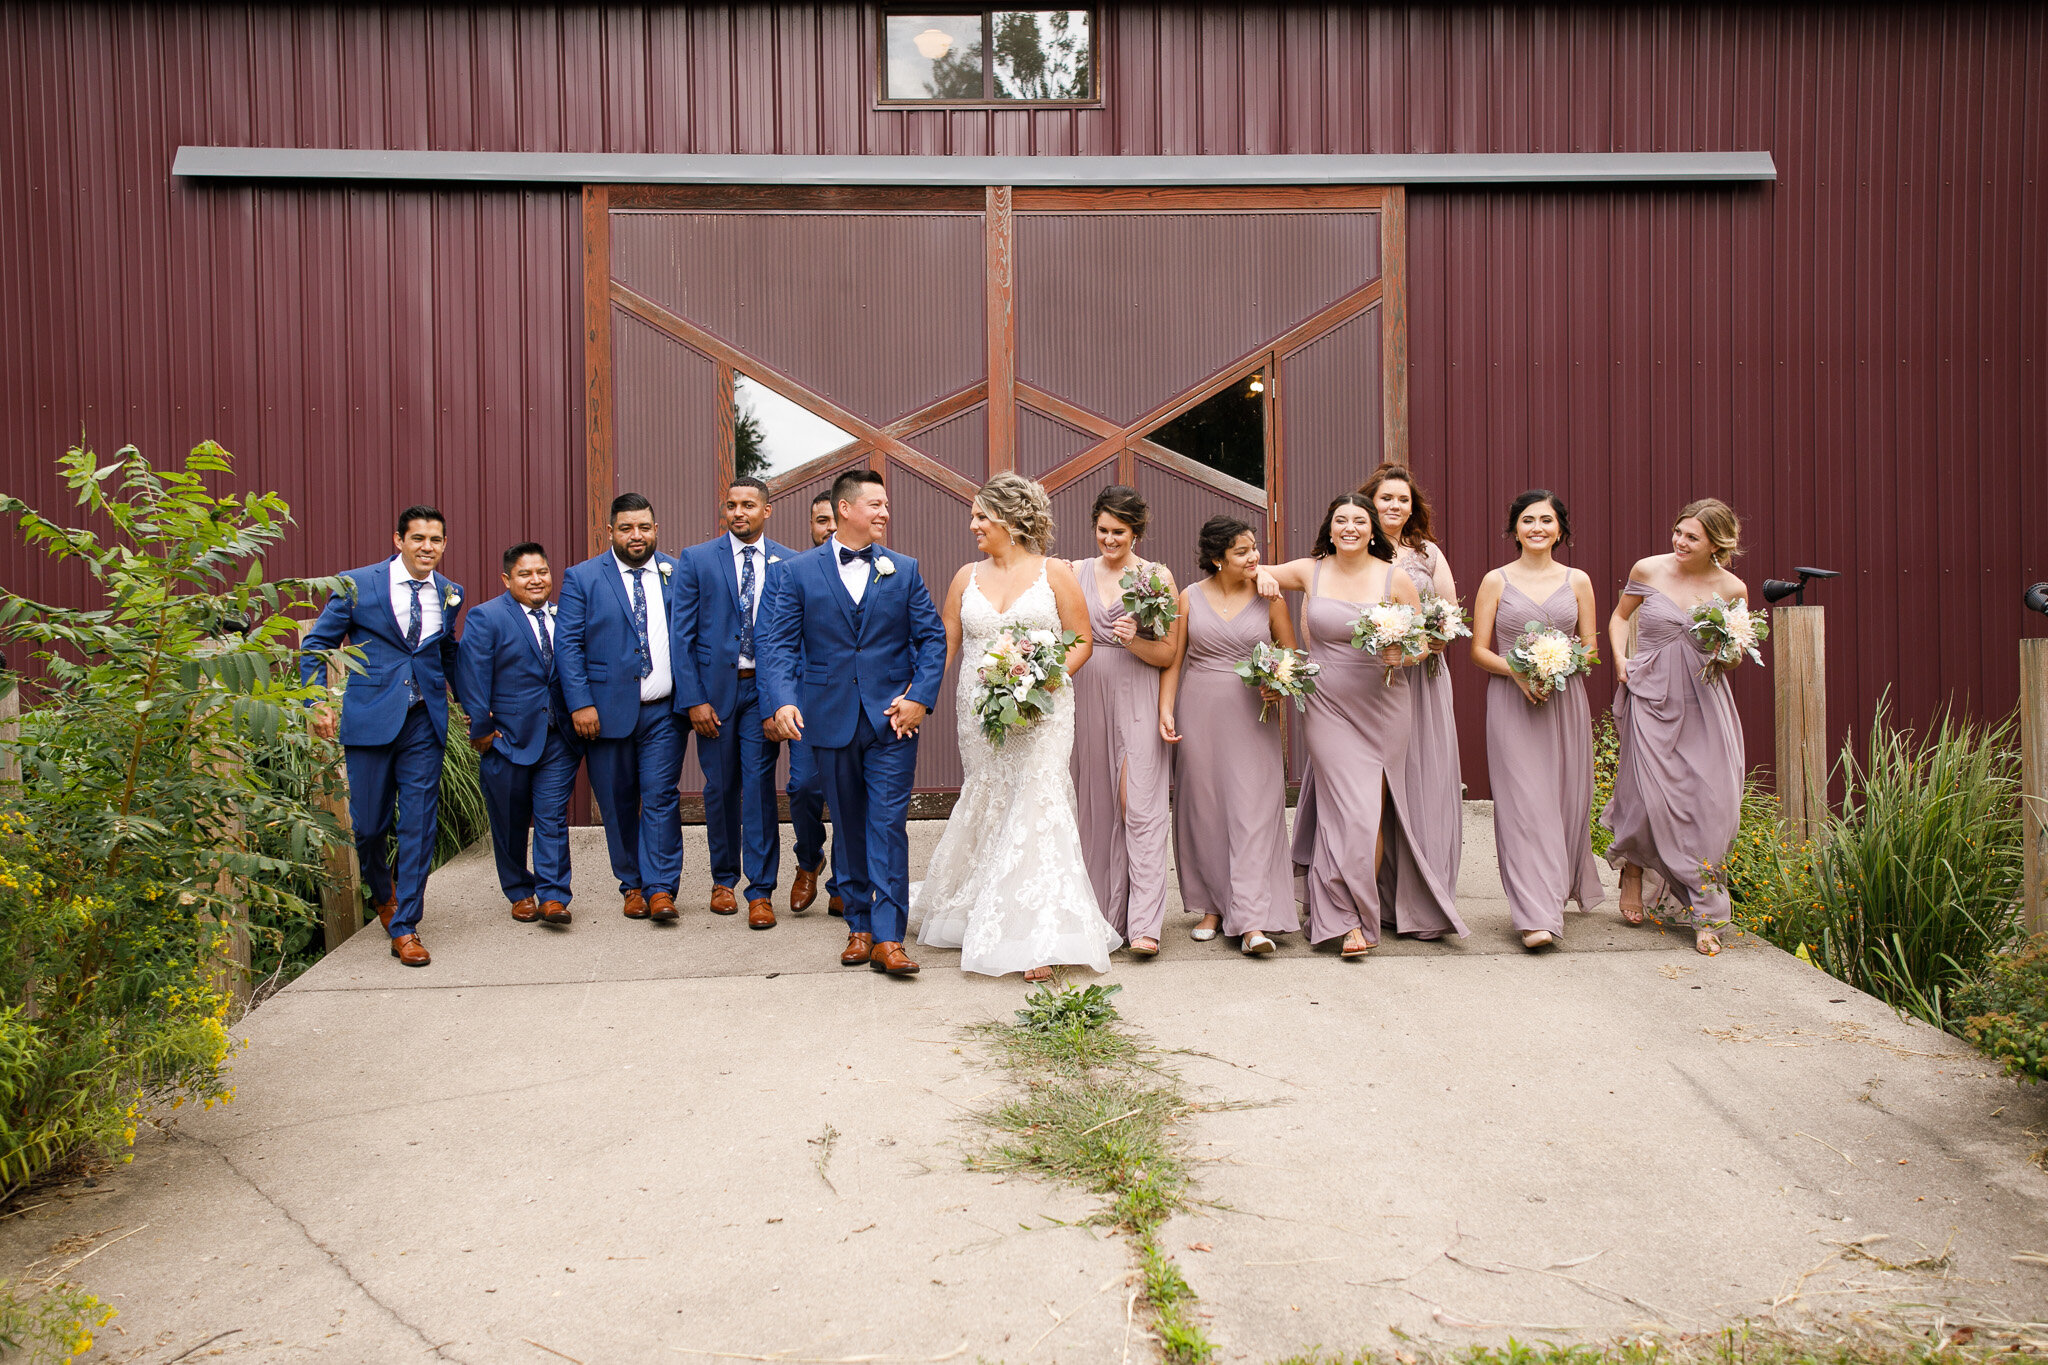 Pinnacle Center Wedding - Jillian and Rodrigo Wedding - Grand Rapids Wedding Photographer - West Michigan Wedding Photographer - West Michigan Wedding - Farmhouse Wedding - J Darling Photo059.jpg